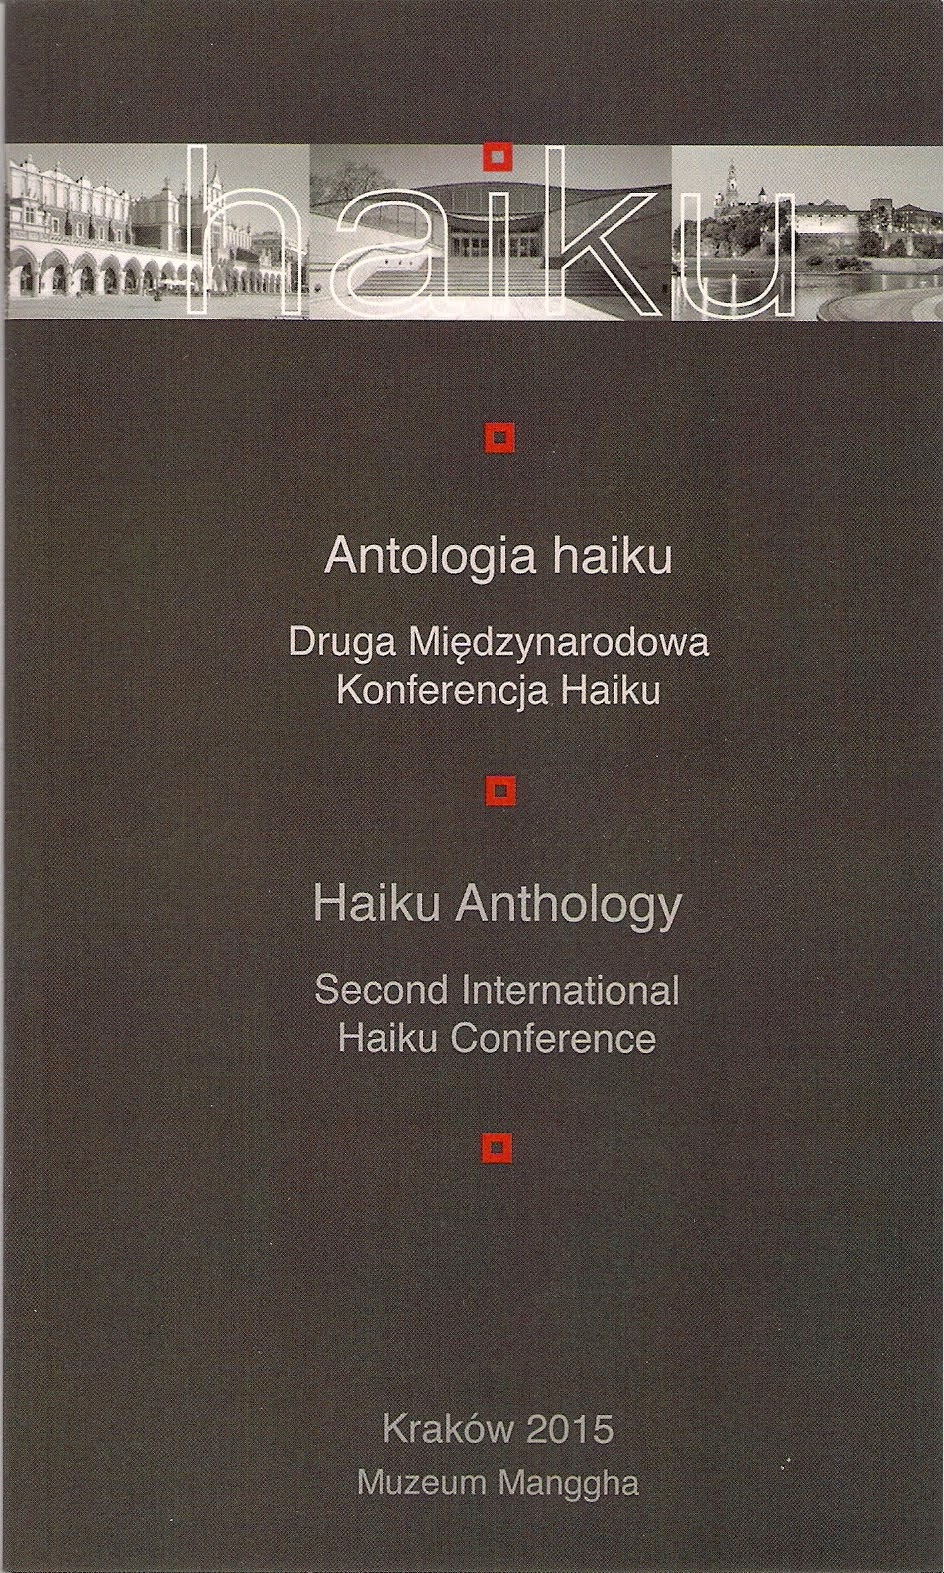 Antologia haiku 2nd IHC Cracow